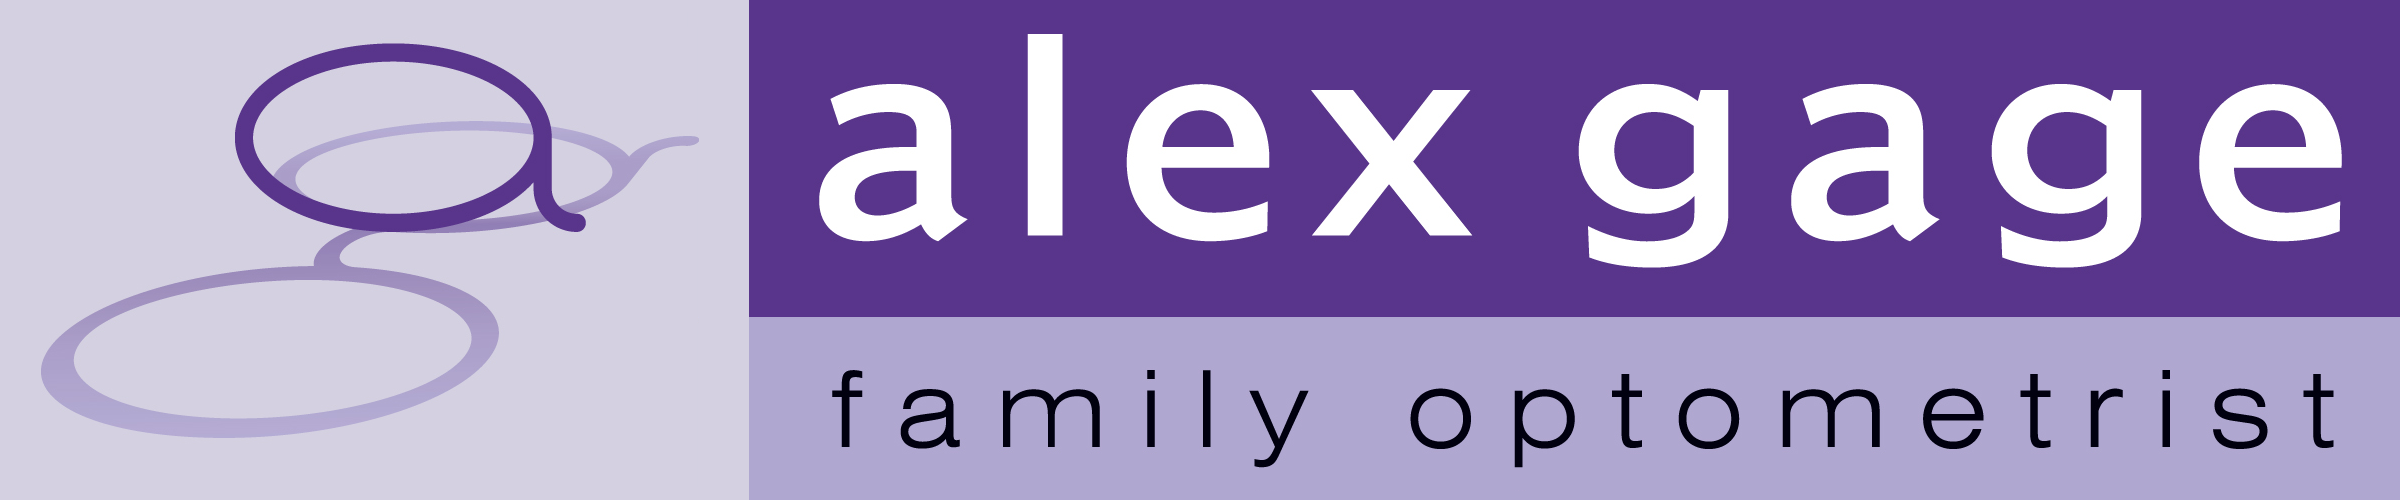 Alex Gage Family Optometrist (logo)